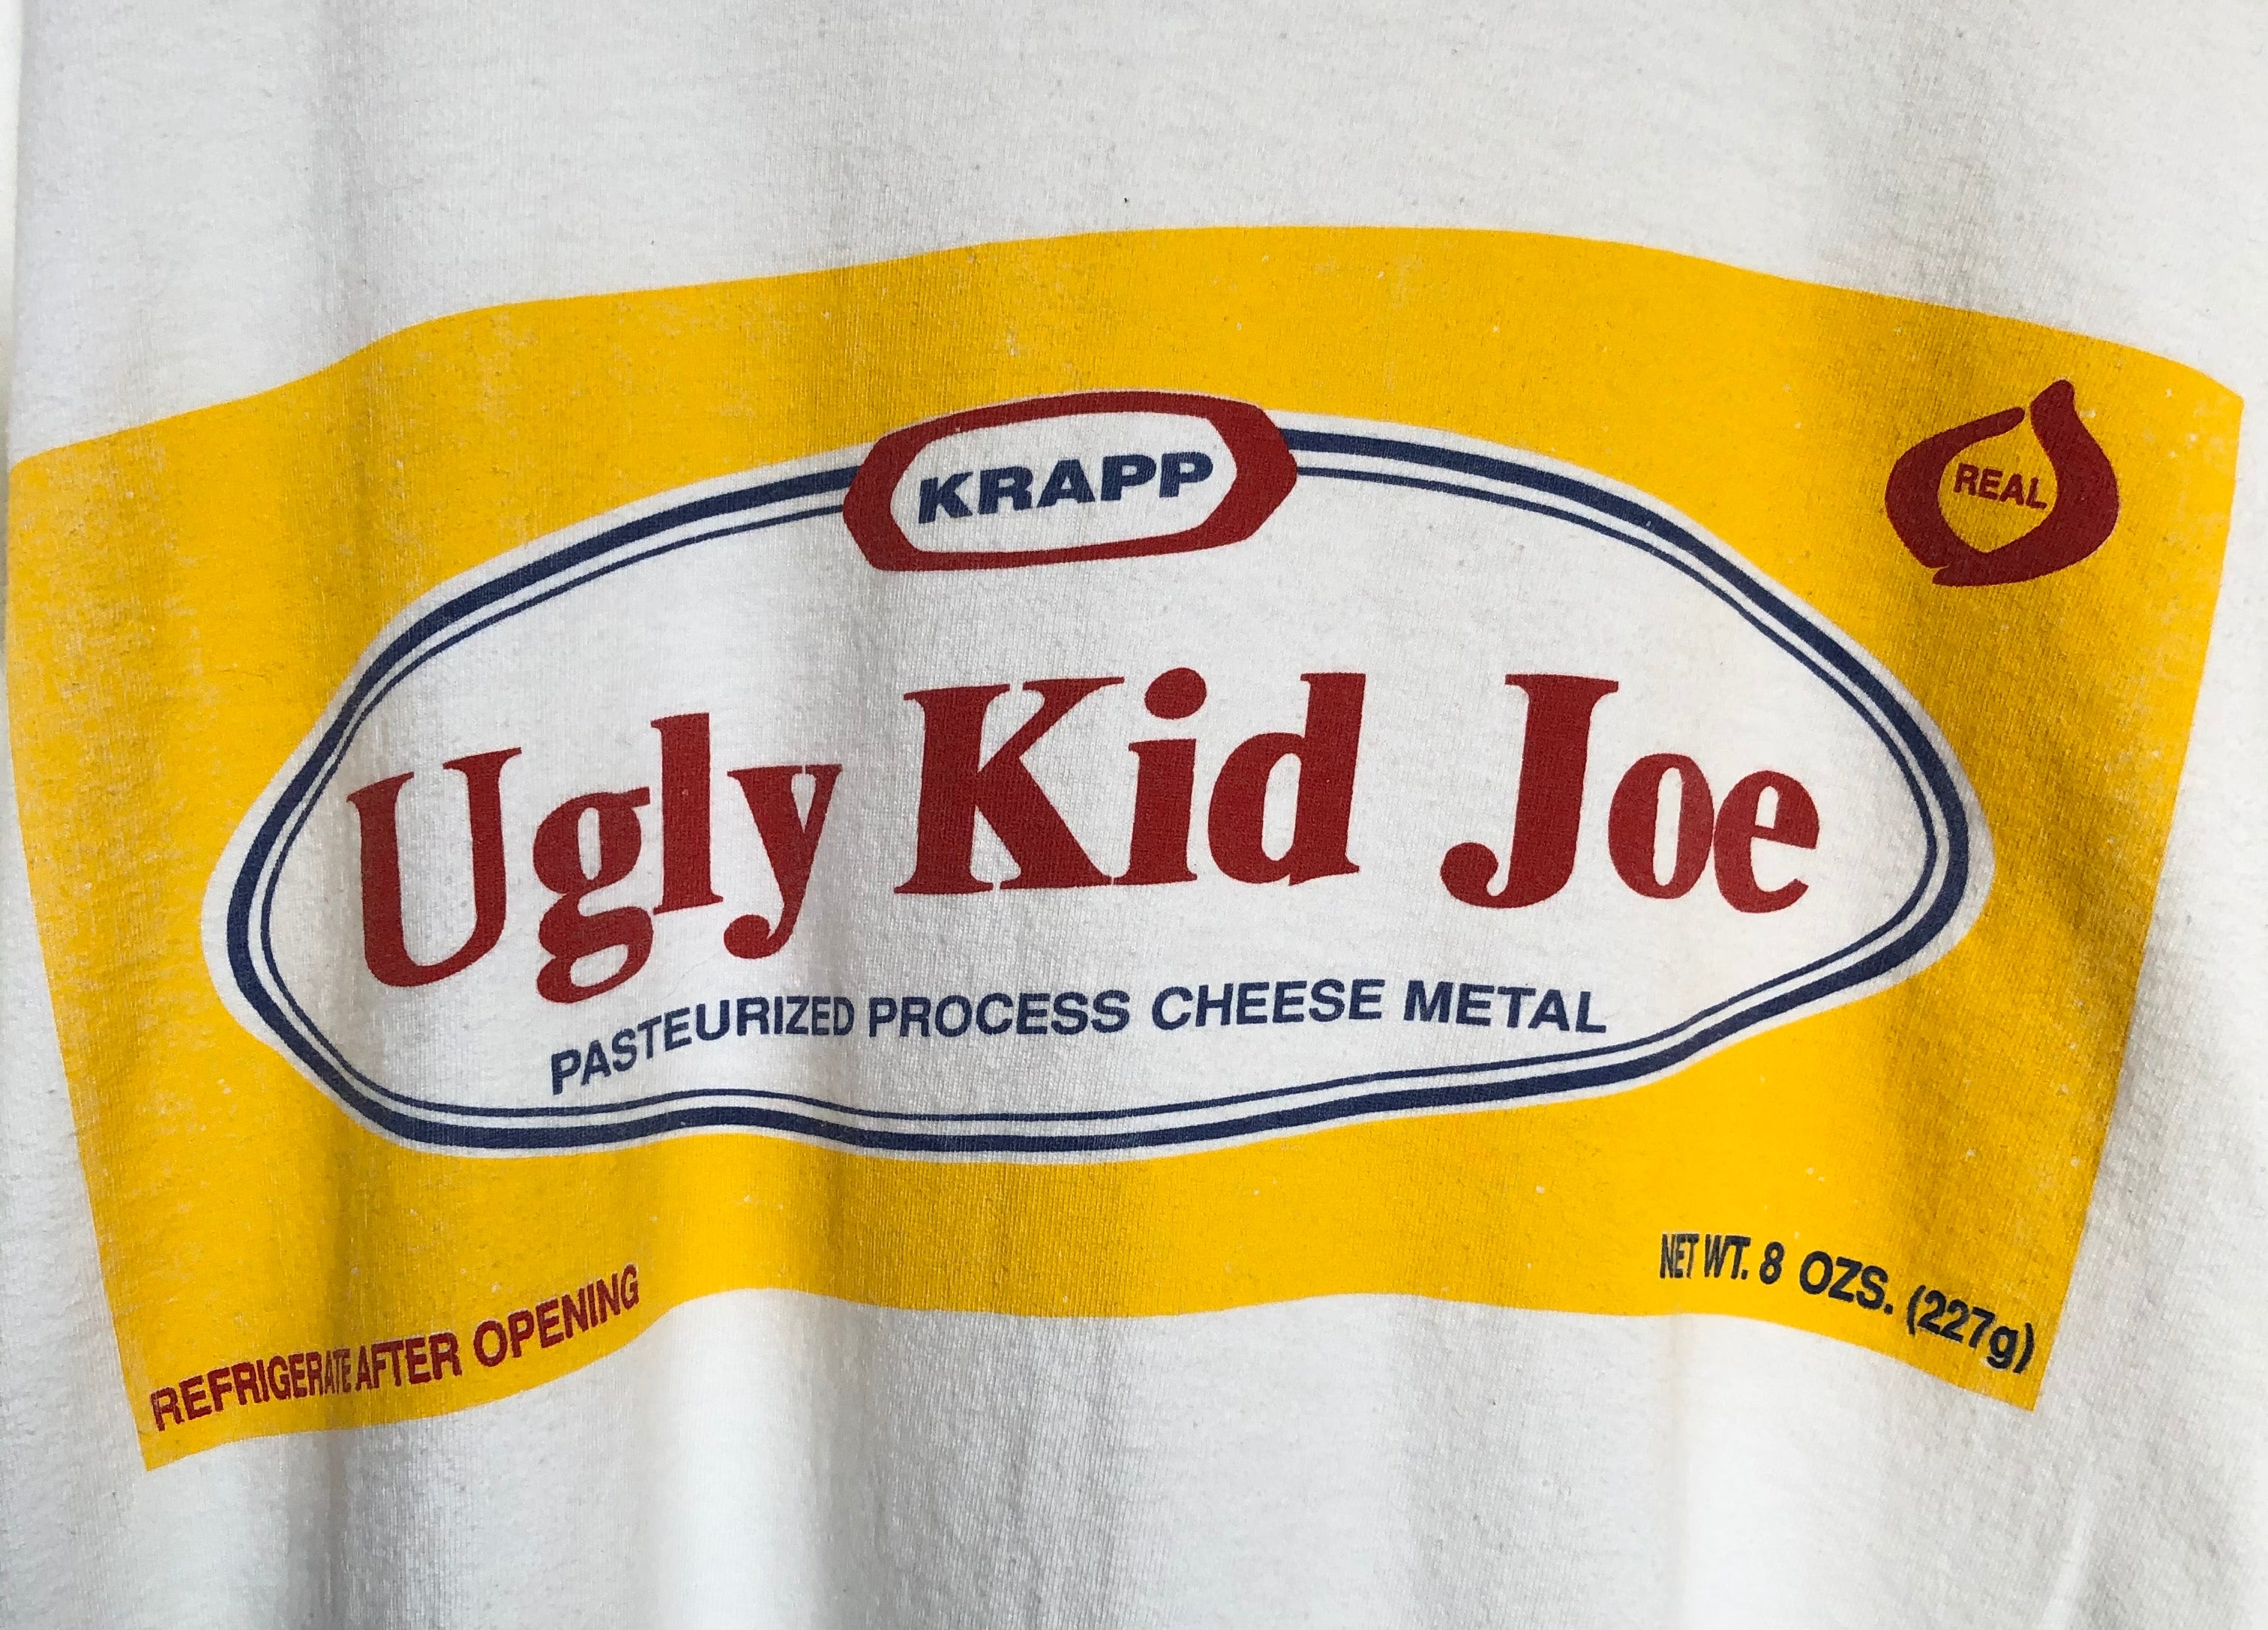 Rare 90’s Ugly Kid Joe Band/Tour Tee